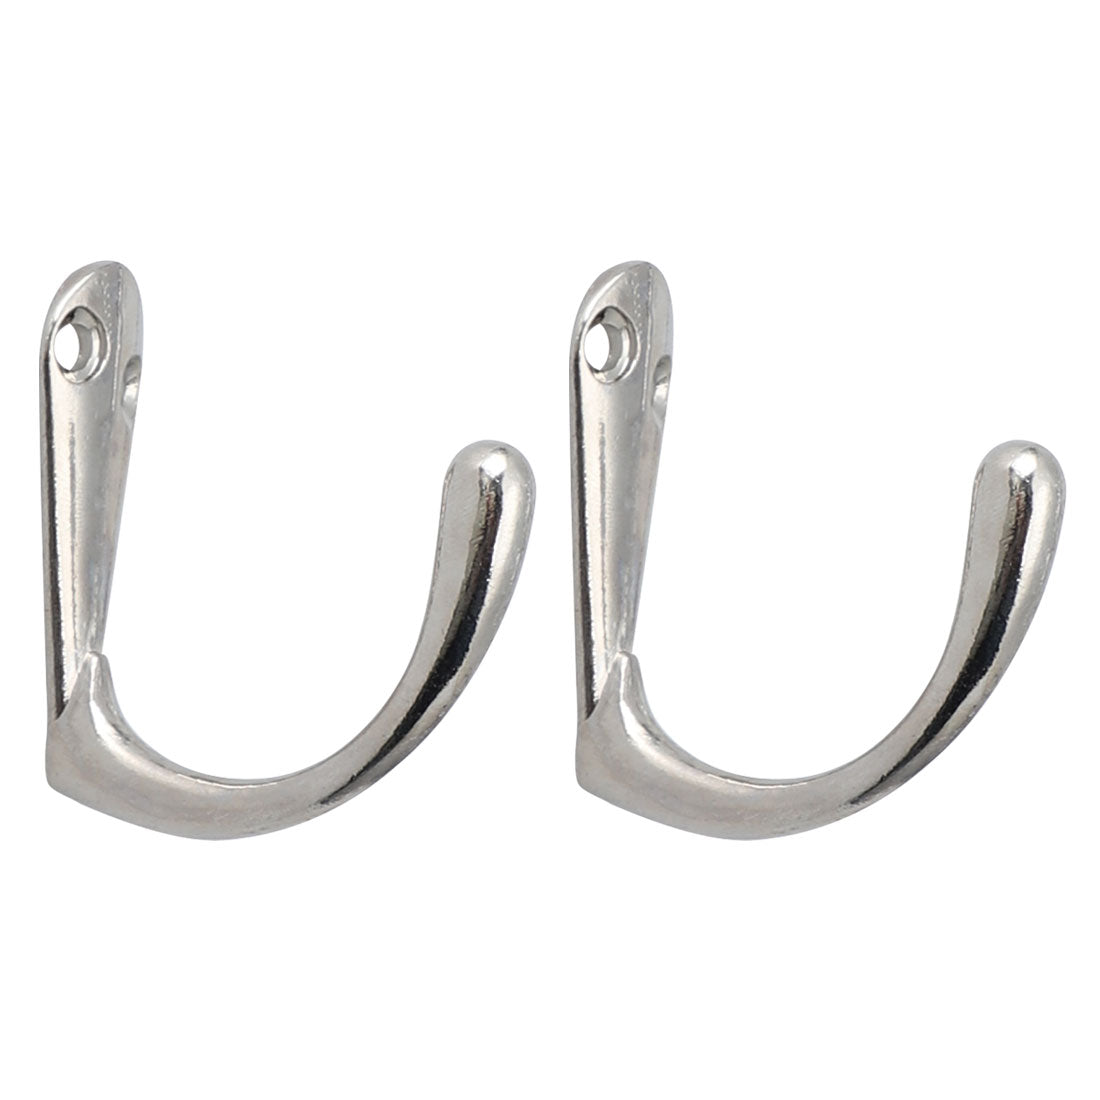 uxcell Uxcell 2pcs Robe Hooks Zinc Alloy Hook Bag Bathroom DIY Hanger w Screws, Silver Tone